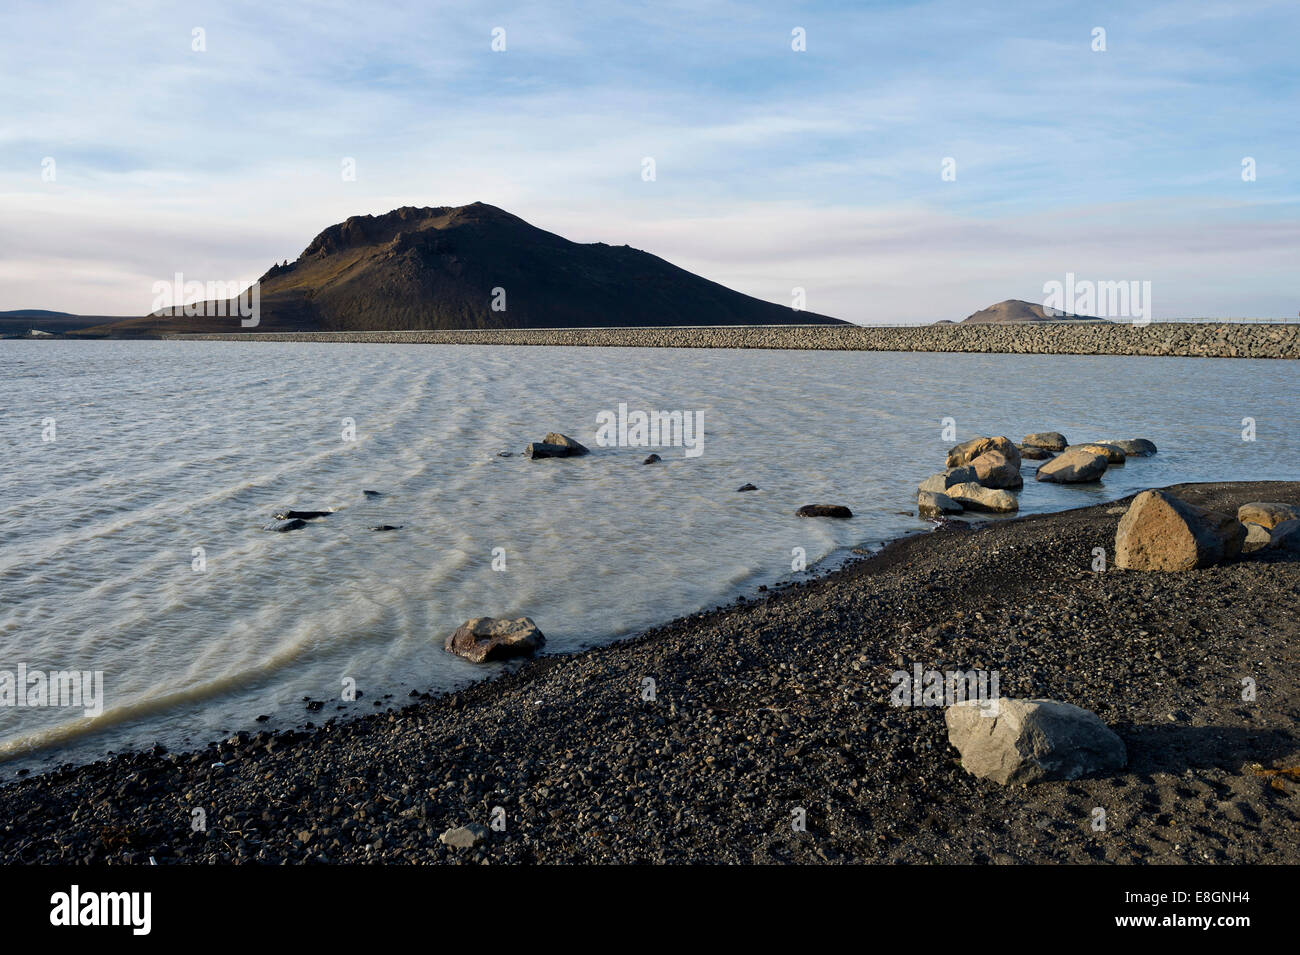 One of the dams of the Kárahnjúkar hydropower plant project with Hálslón water reservoir, Eastern Highlands, Iceland Stock Photo